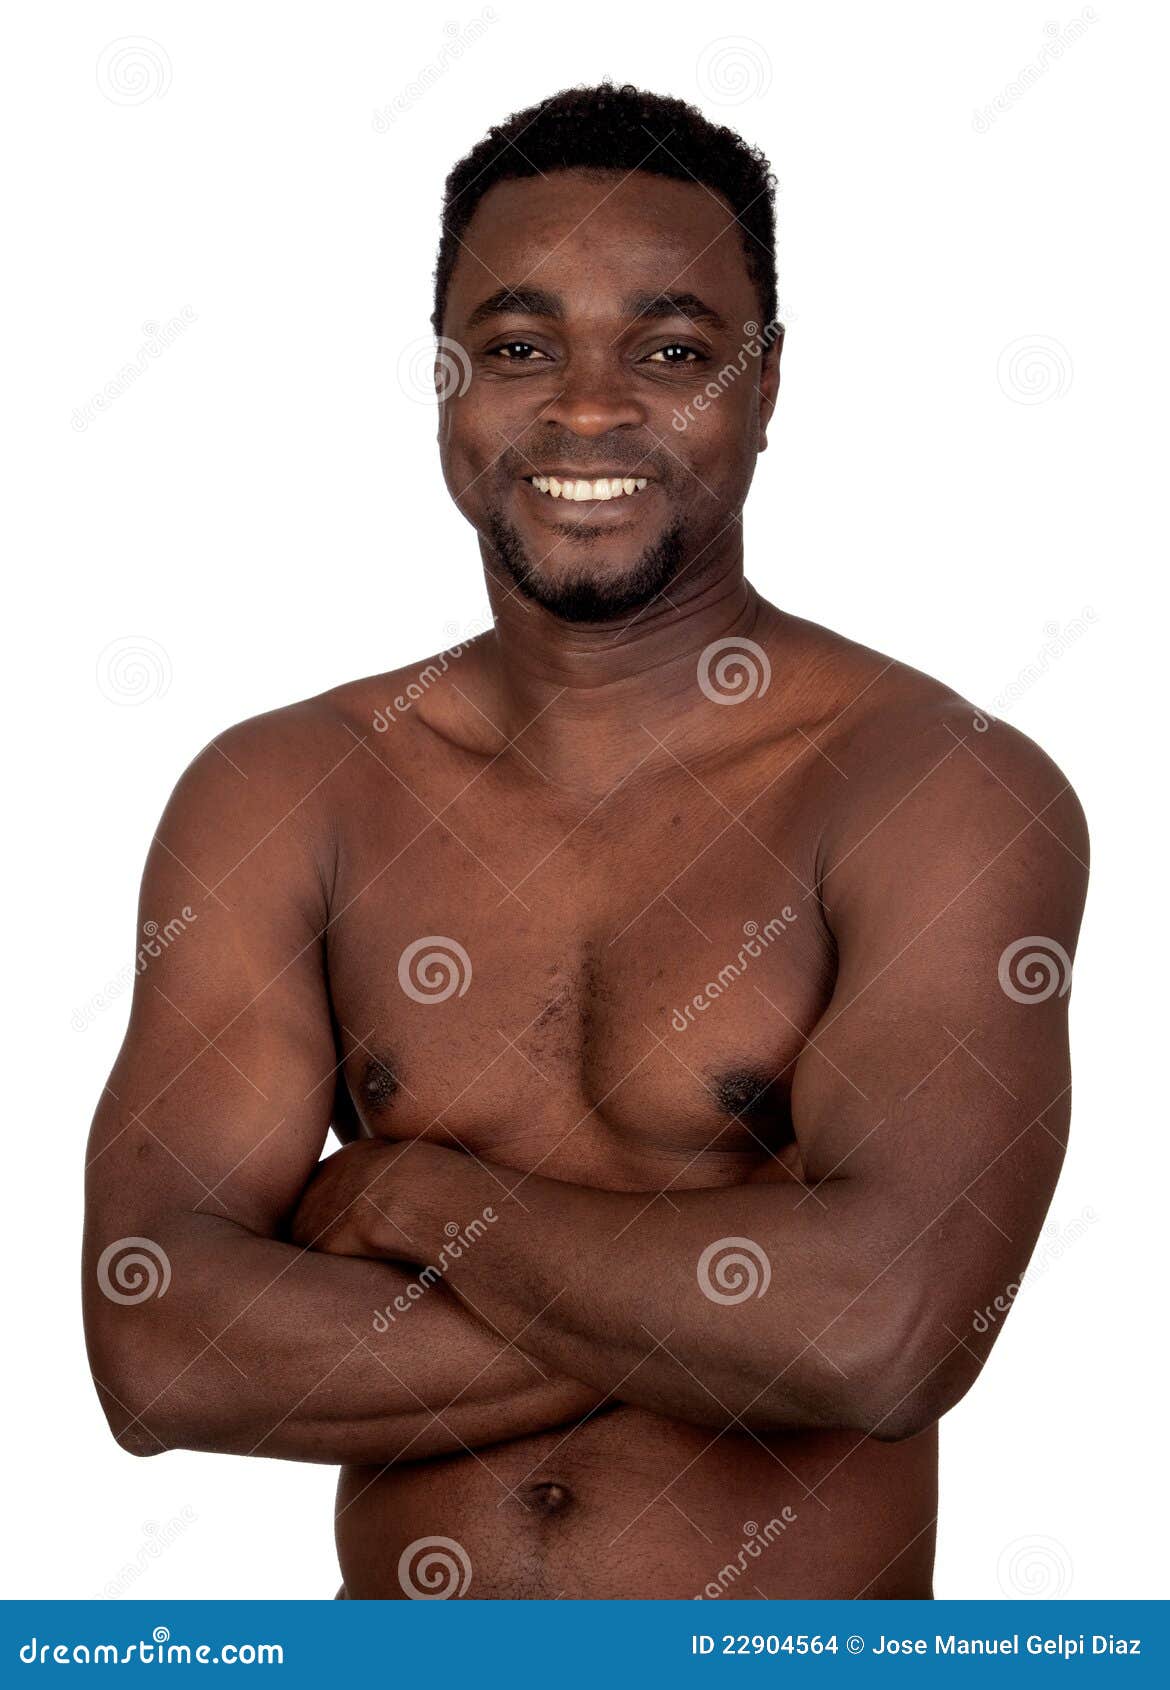 burcu eroglu share black man chest hair photos